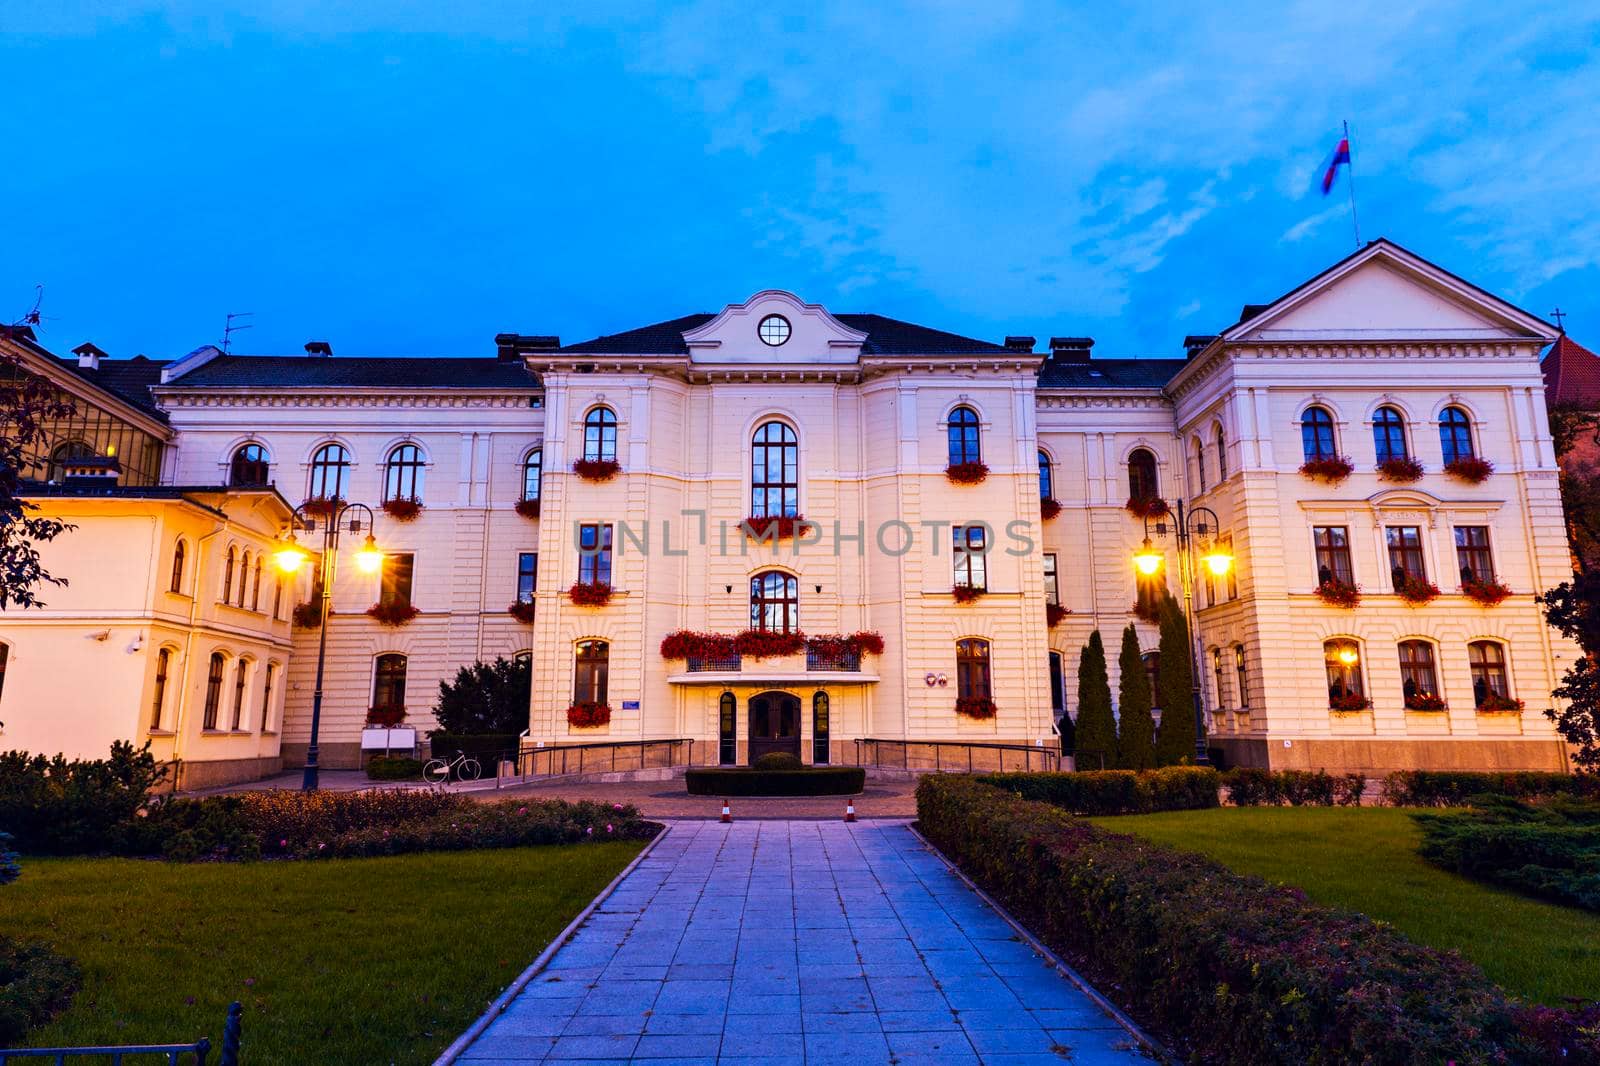 City Hall in Bydgoszcz by benkrut